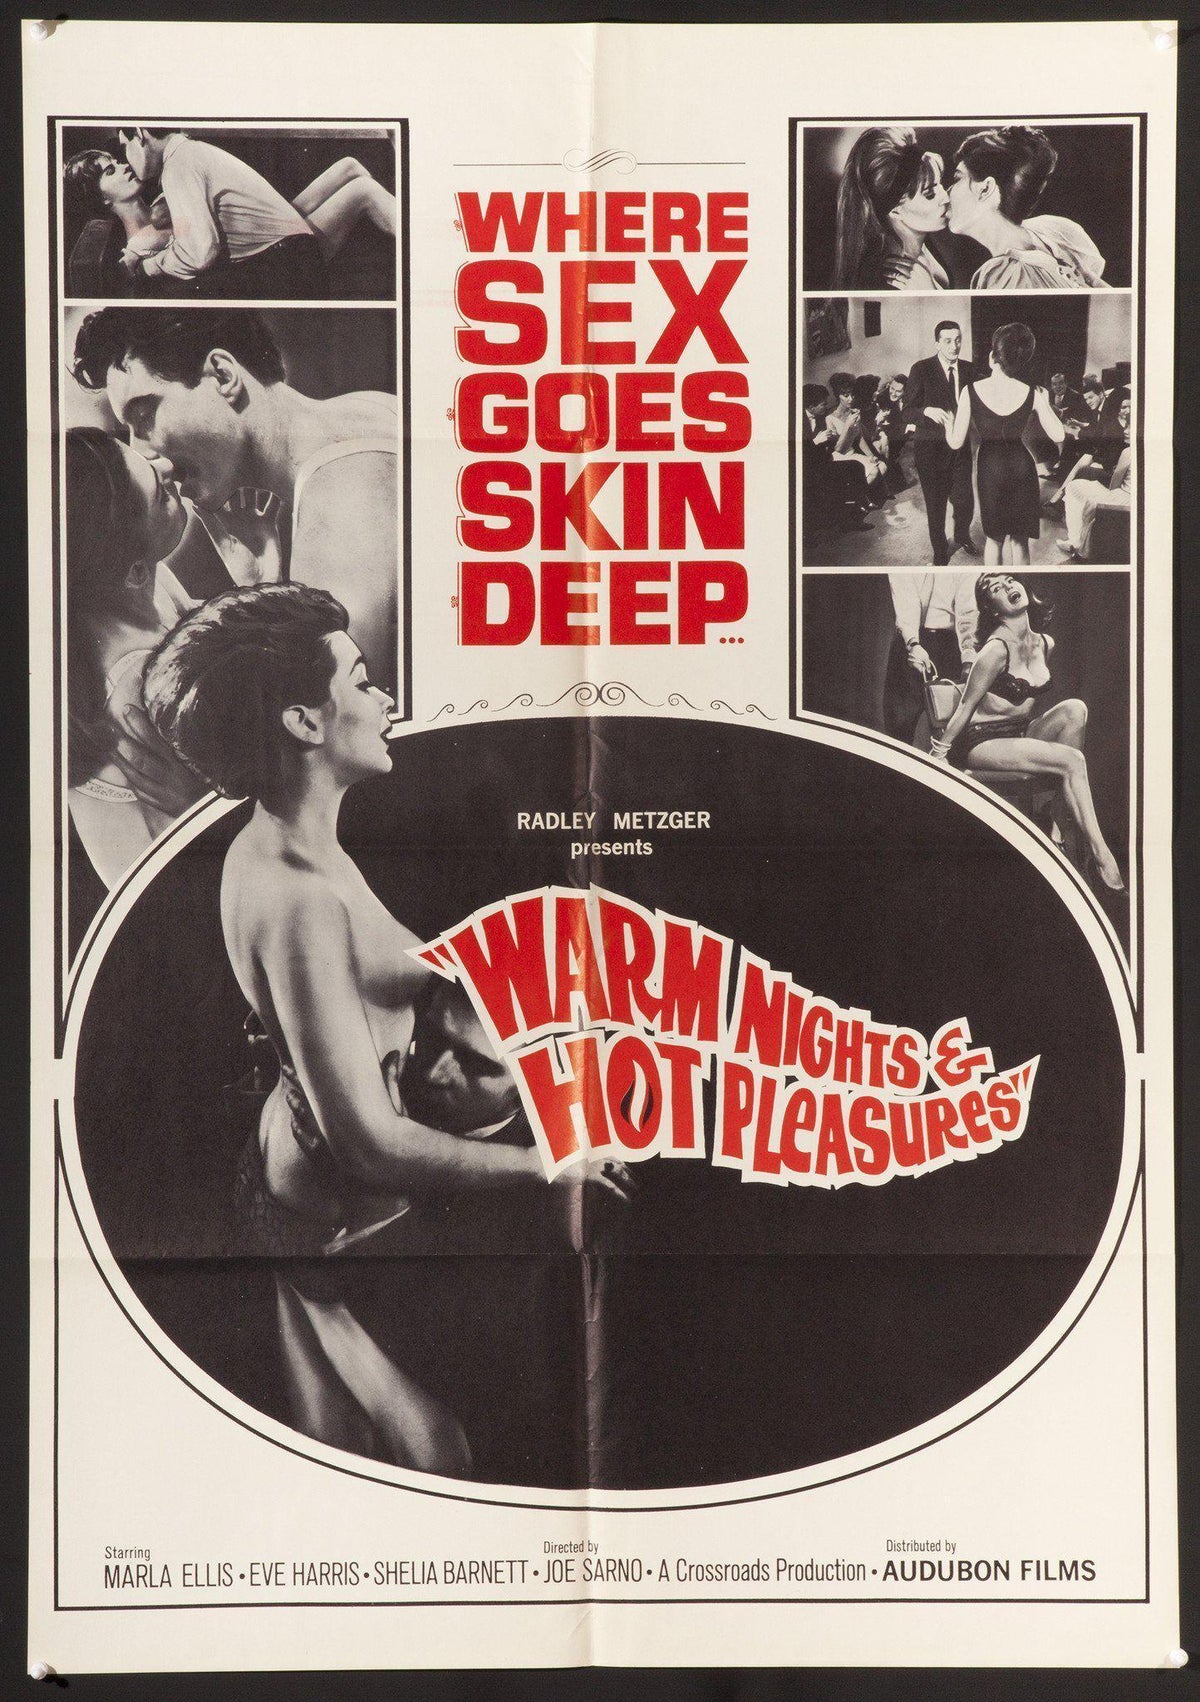 Warm Nights and Hot Pleasures 1 Sheet (27x41) Original Vintage Movie Poster